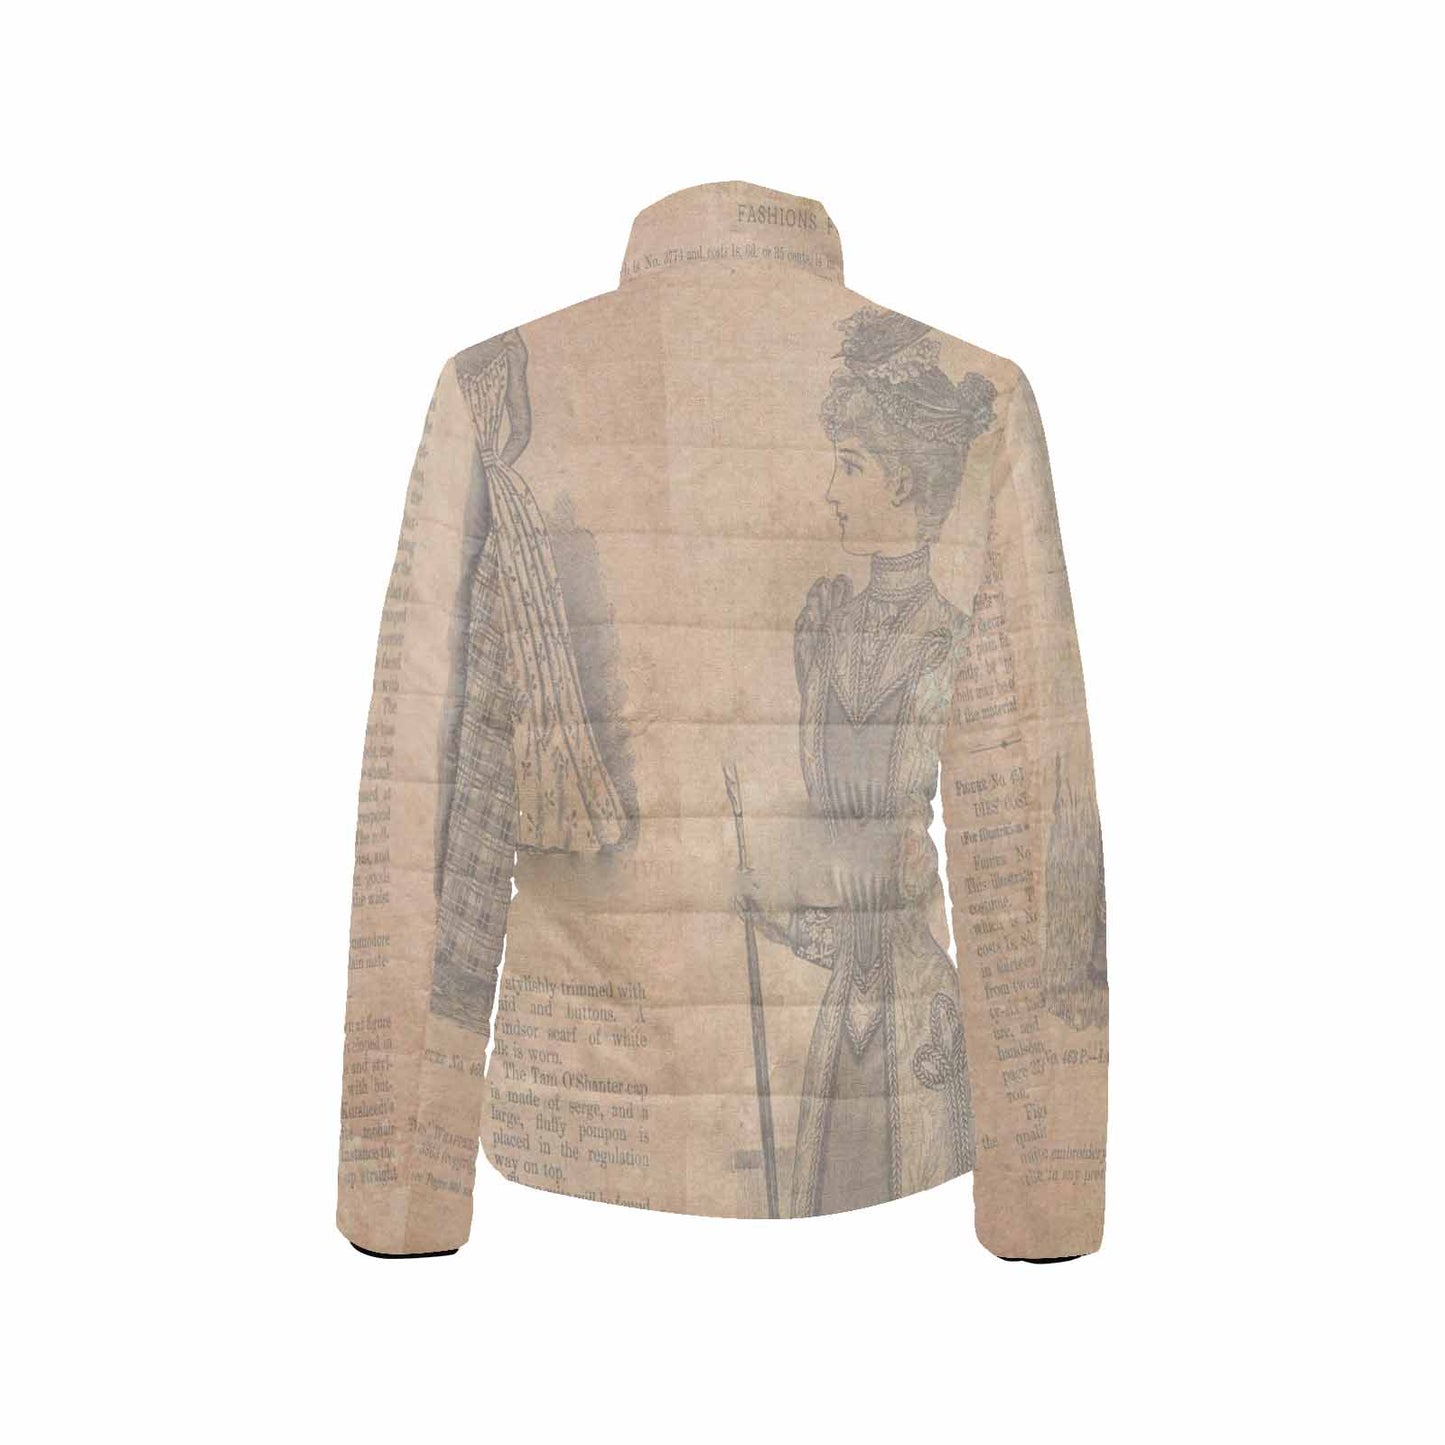 Antique general print quilted jacket, design 35